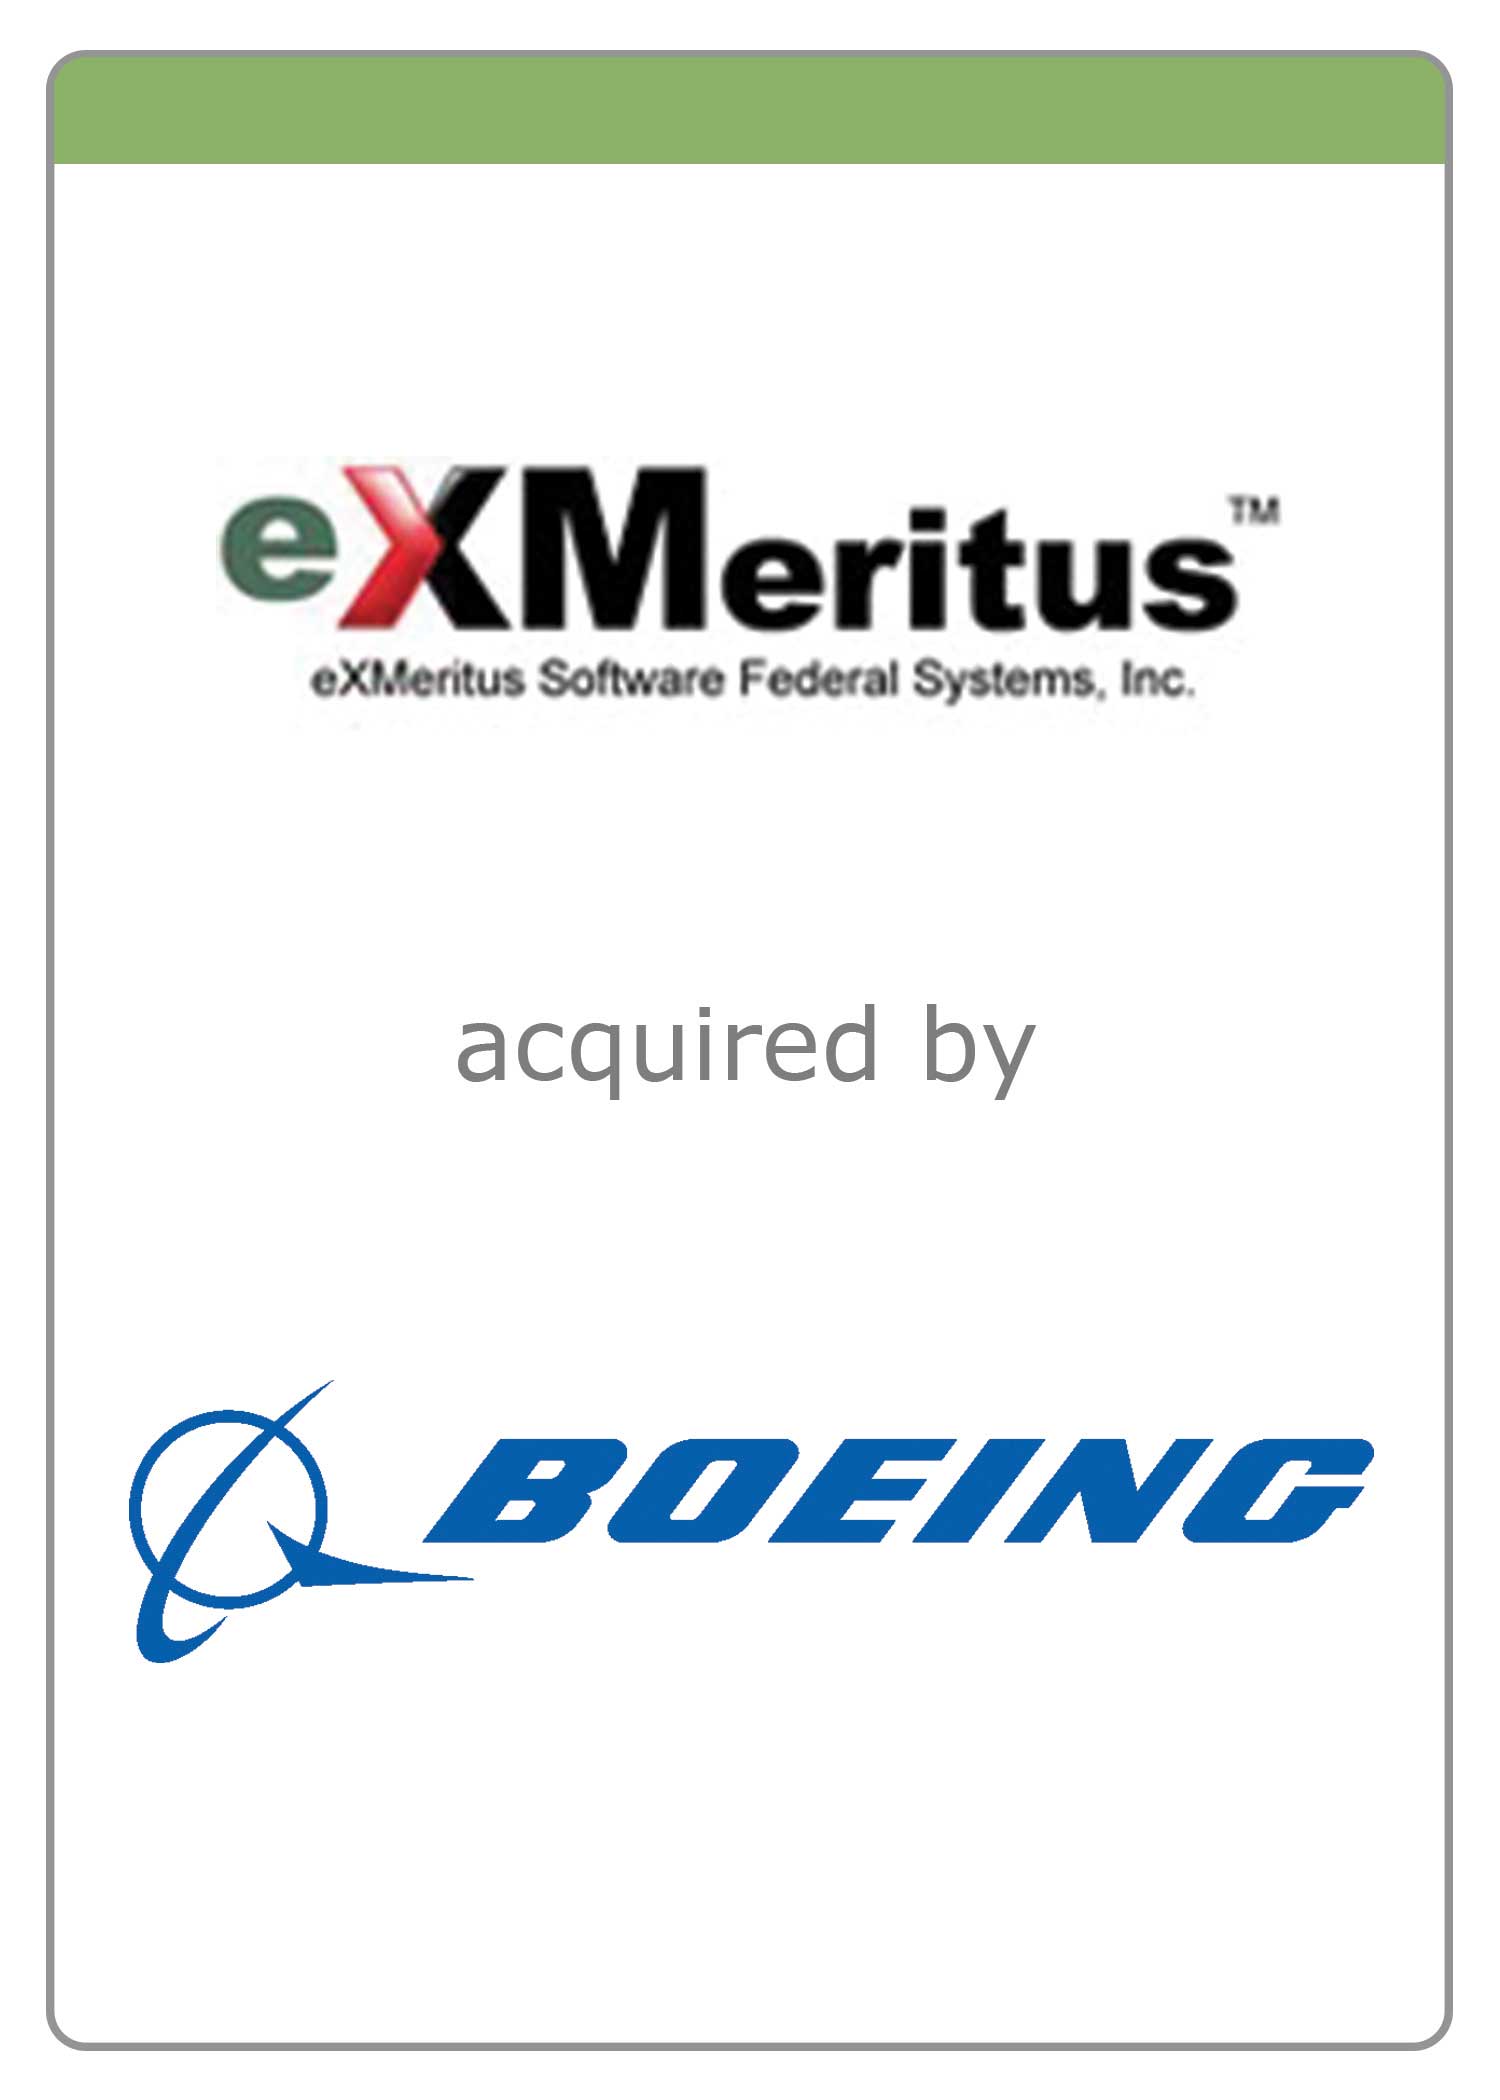 Exmeritus acquired by Boeing